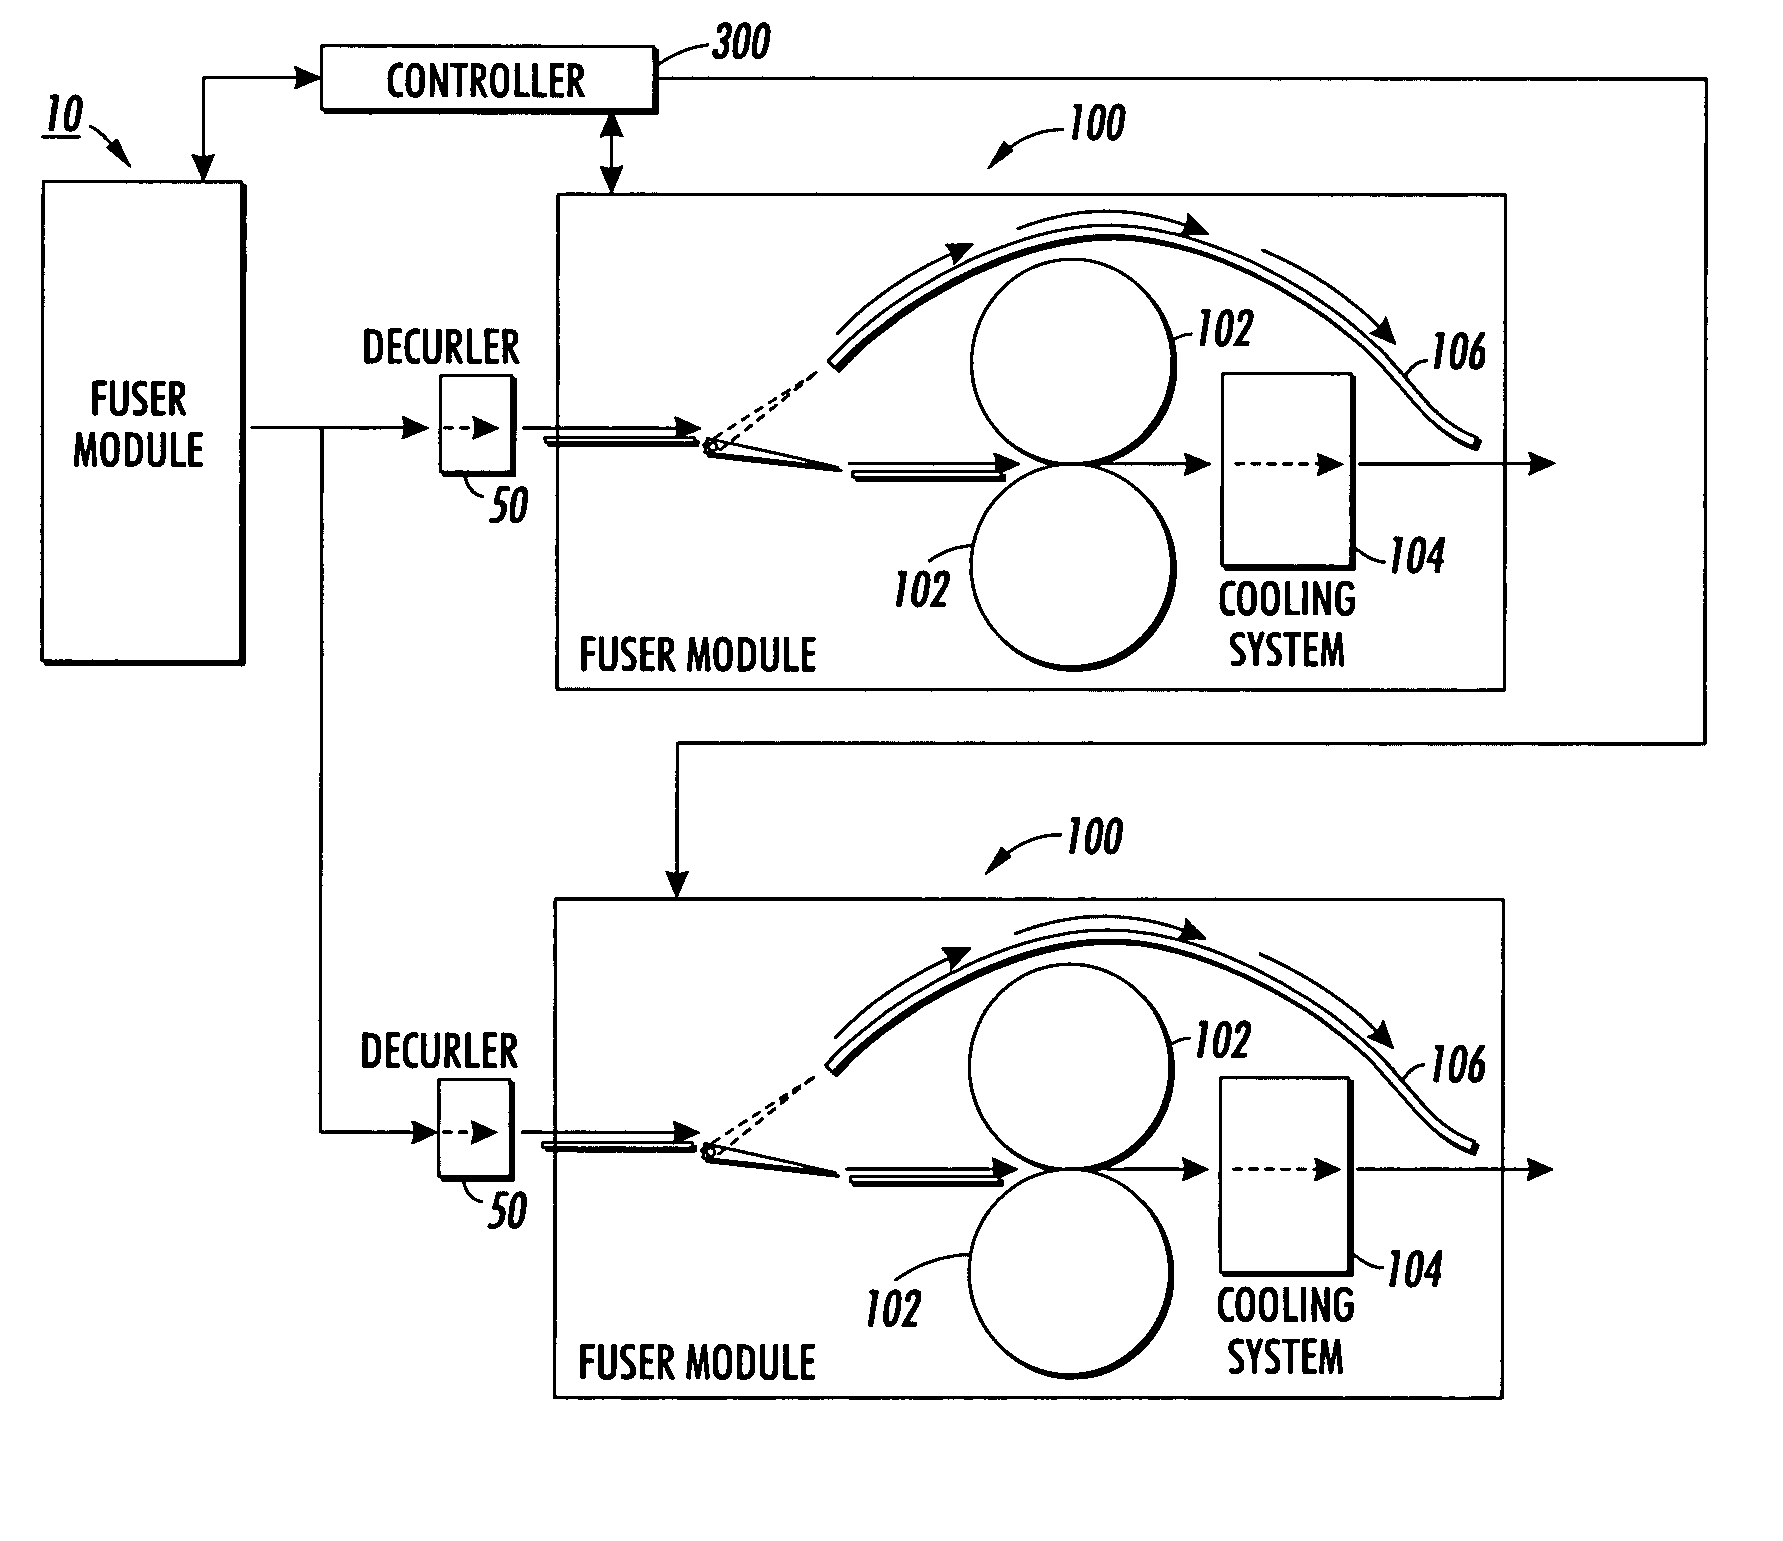 Modular multi-stage fusing system